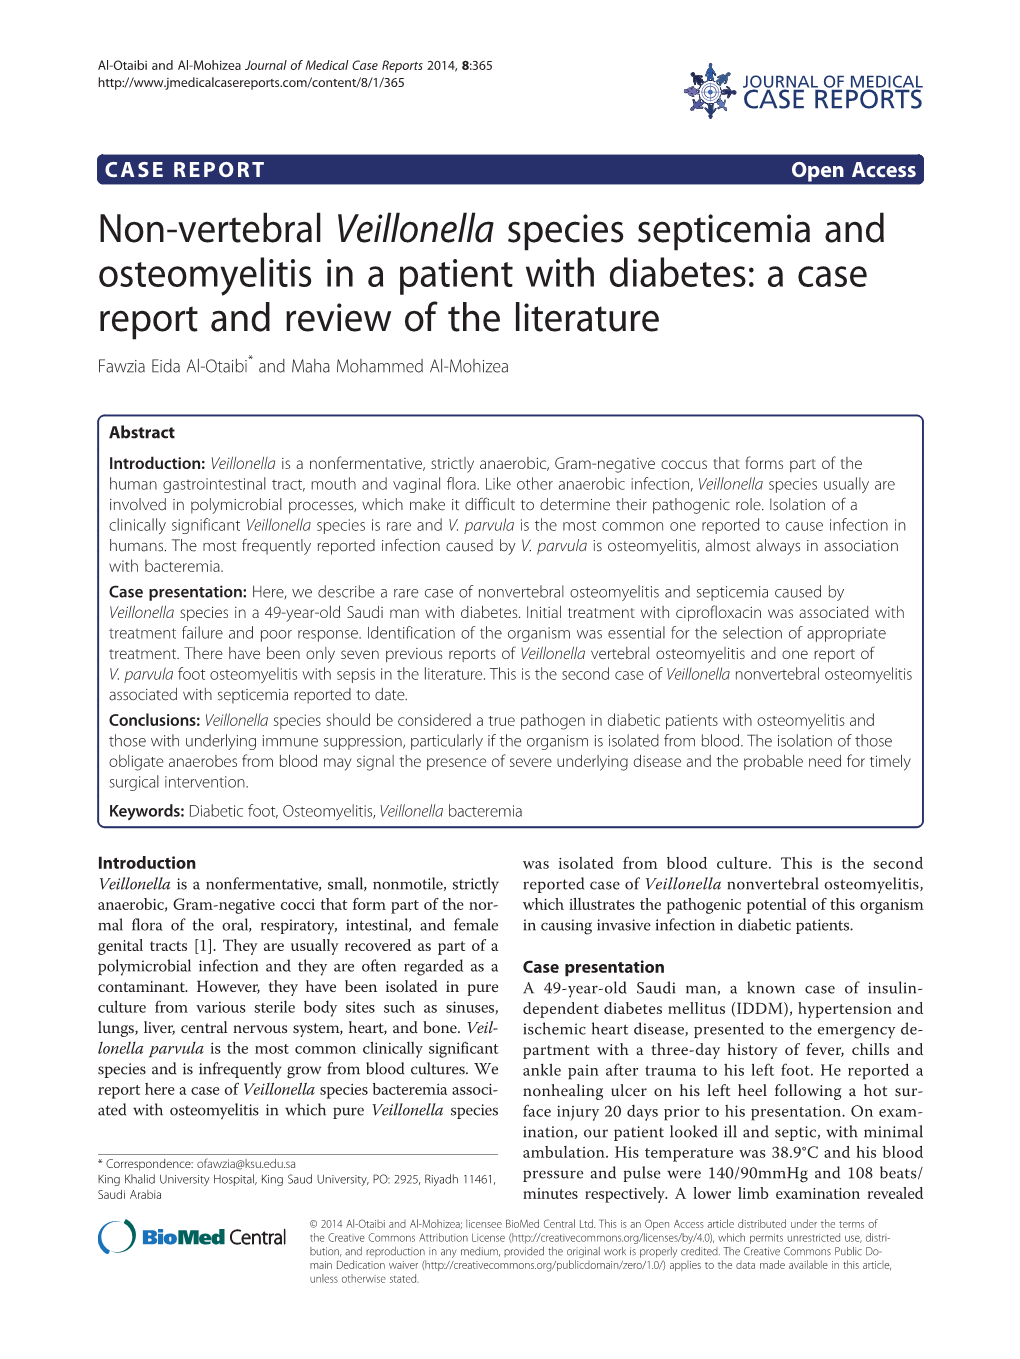 Non-Vertebral Veillonella Species Septicemia and Osteomyelitis in A